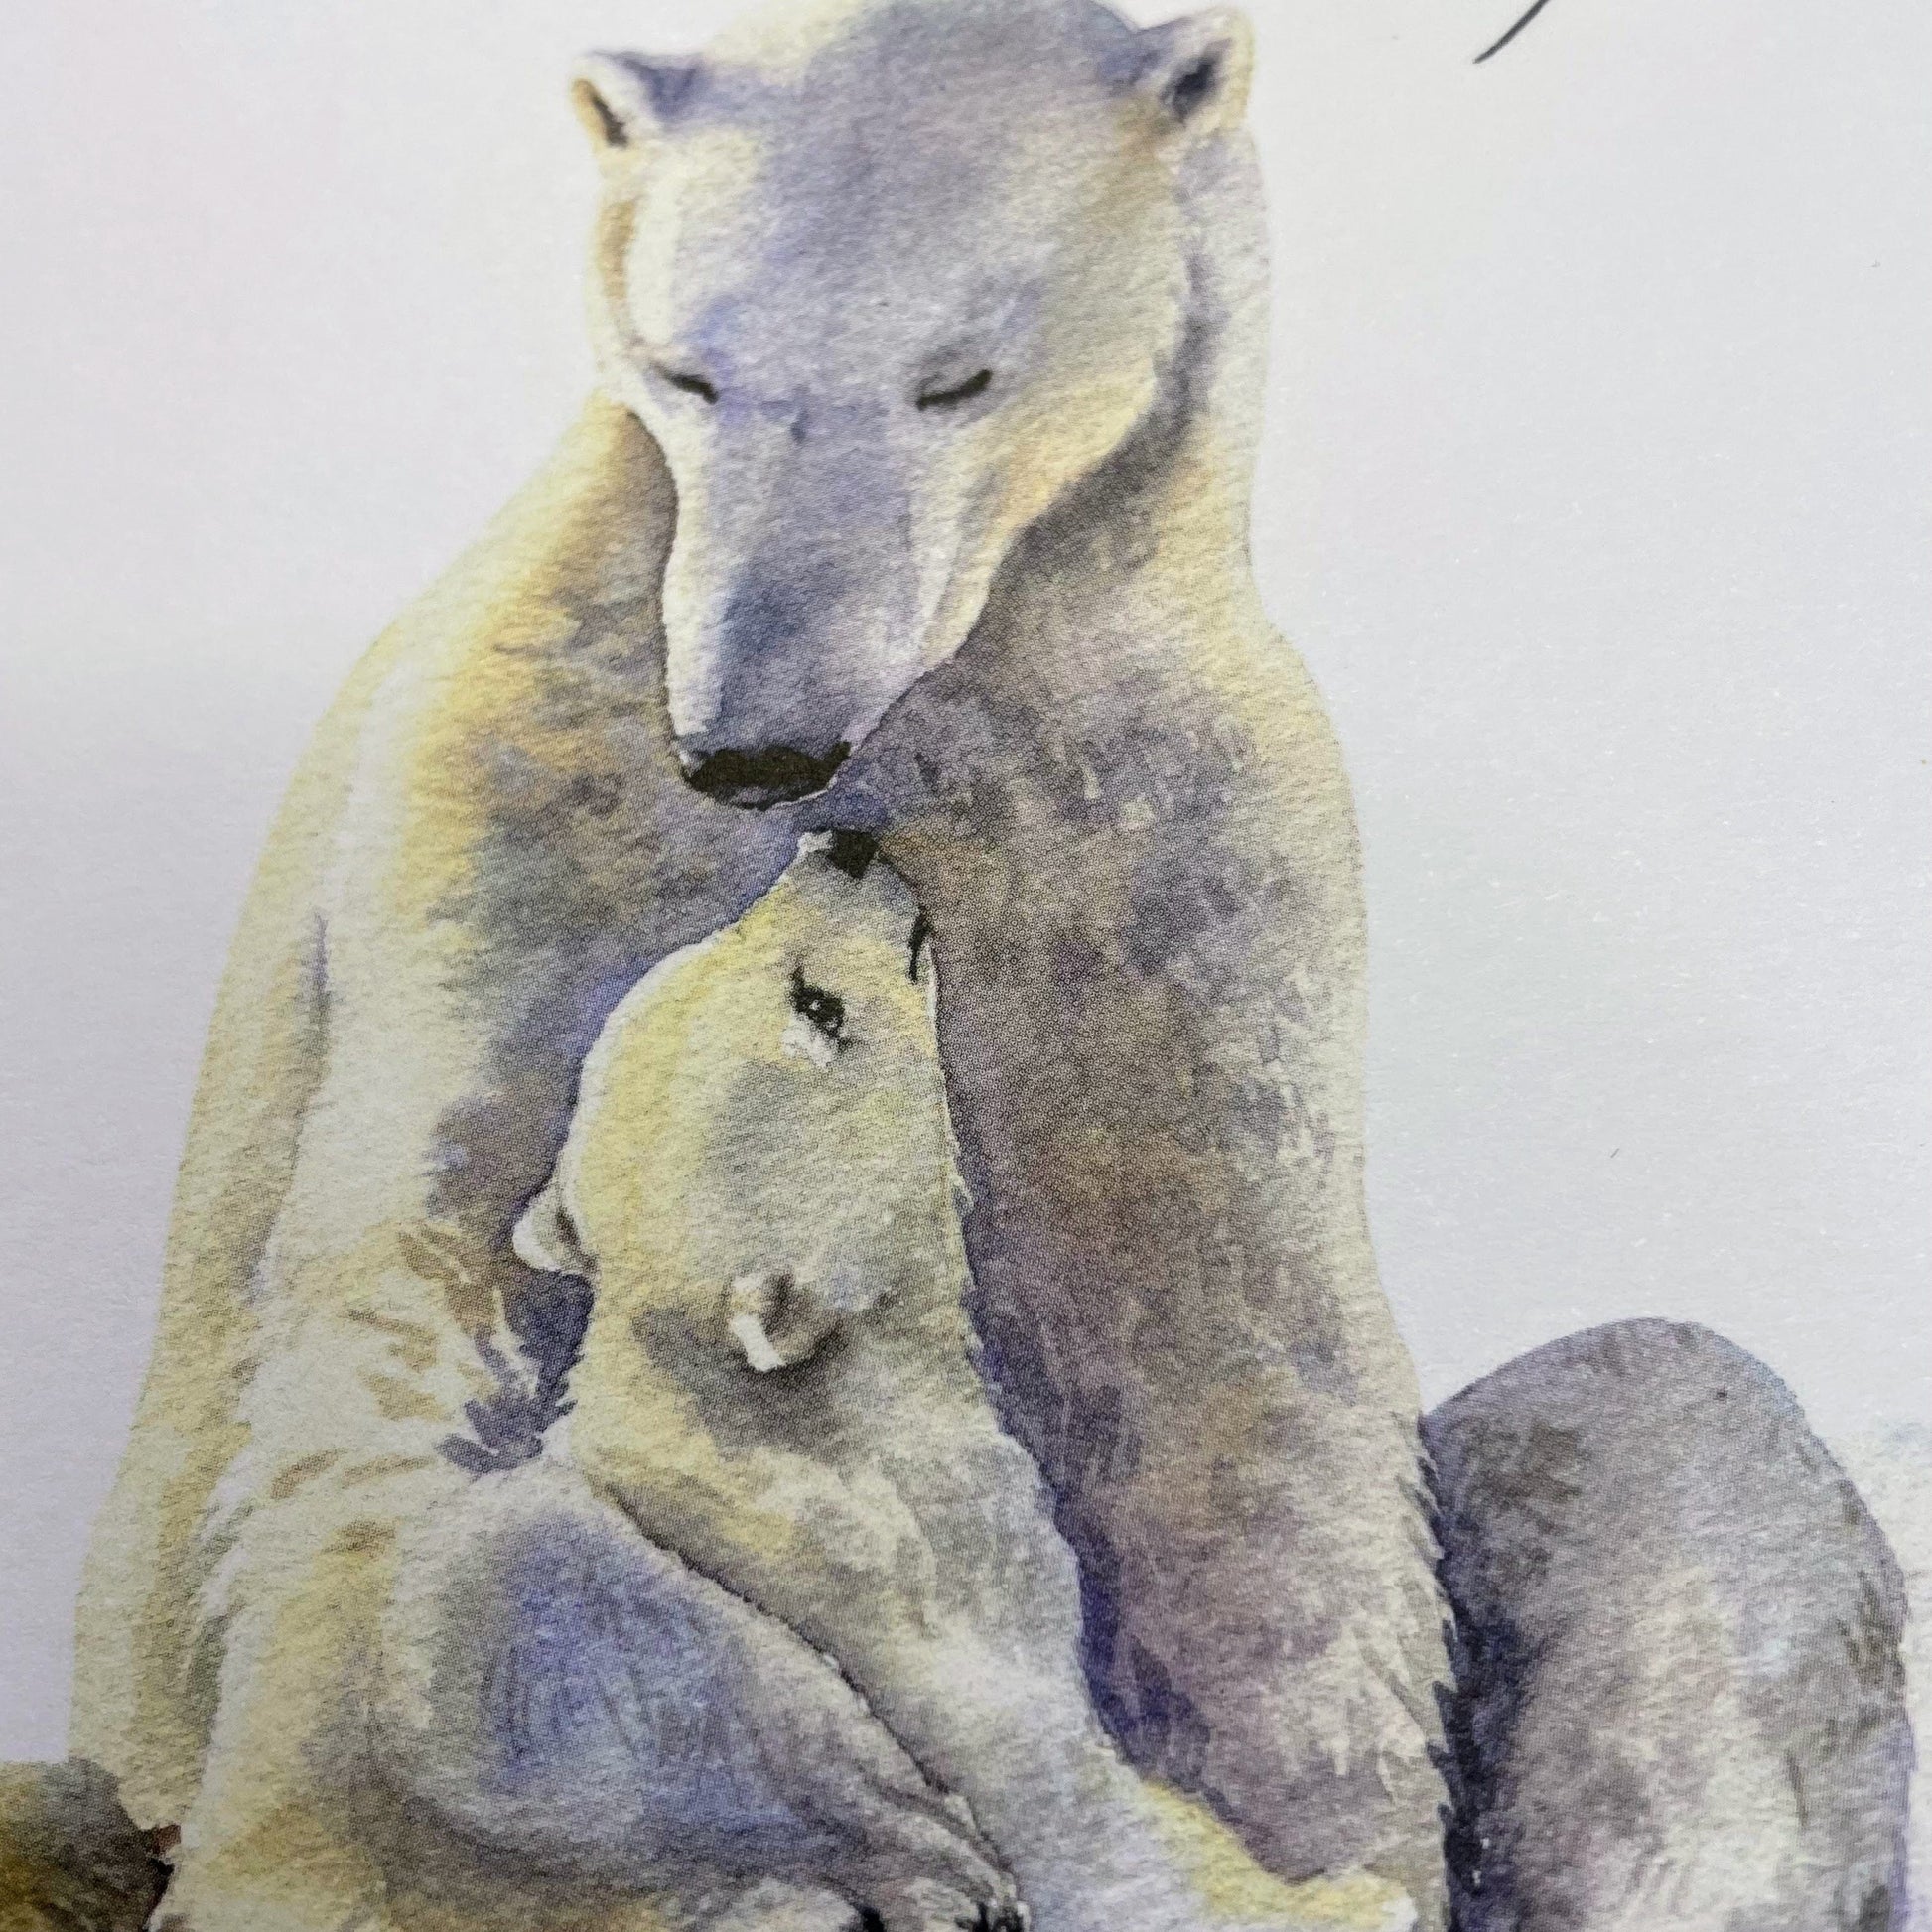 And Hope Designs Love you mum polar bears